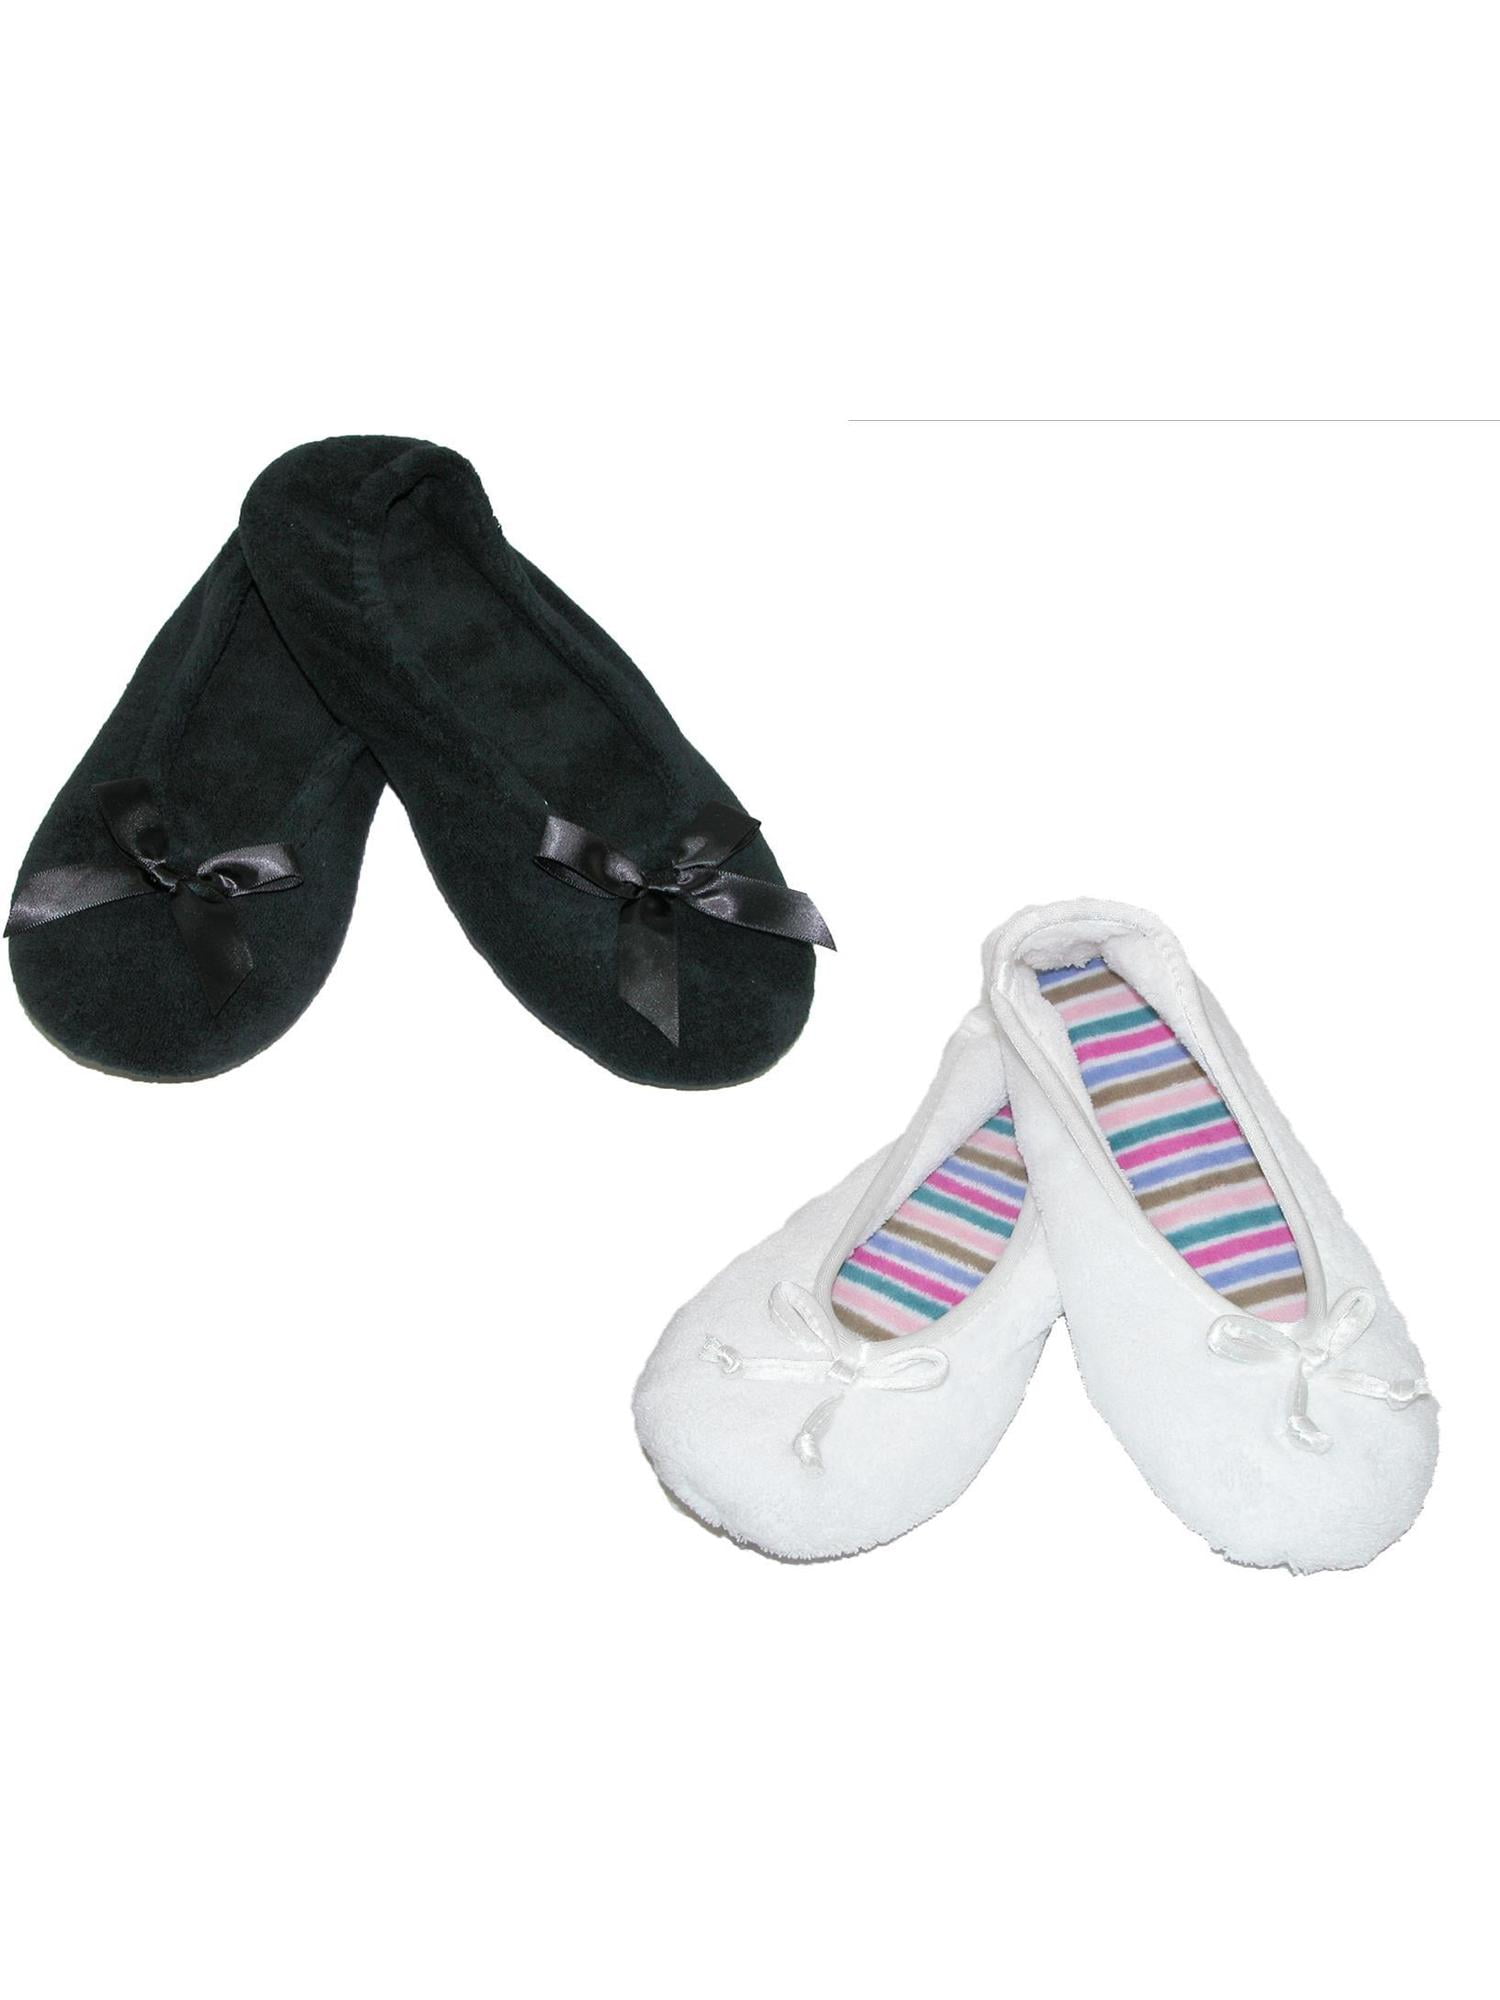 isotoner women's terry classic ballerina slippers